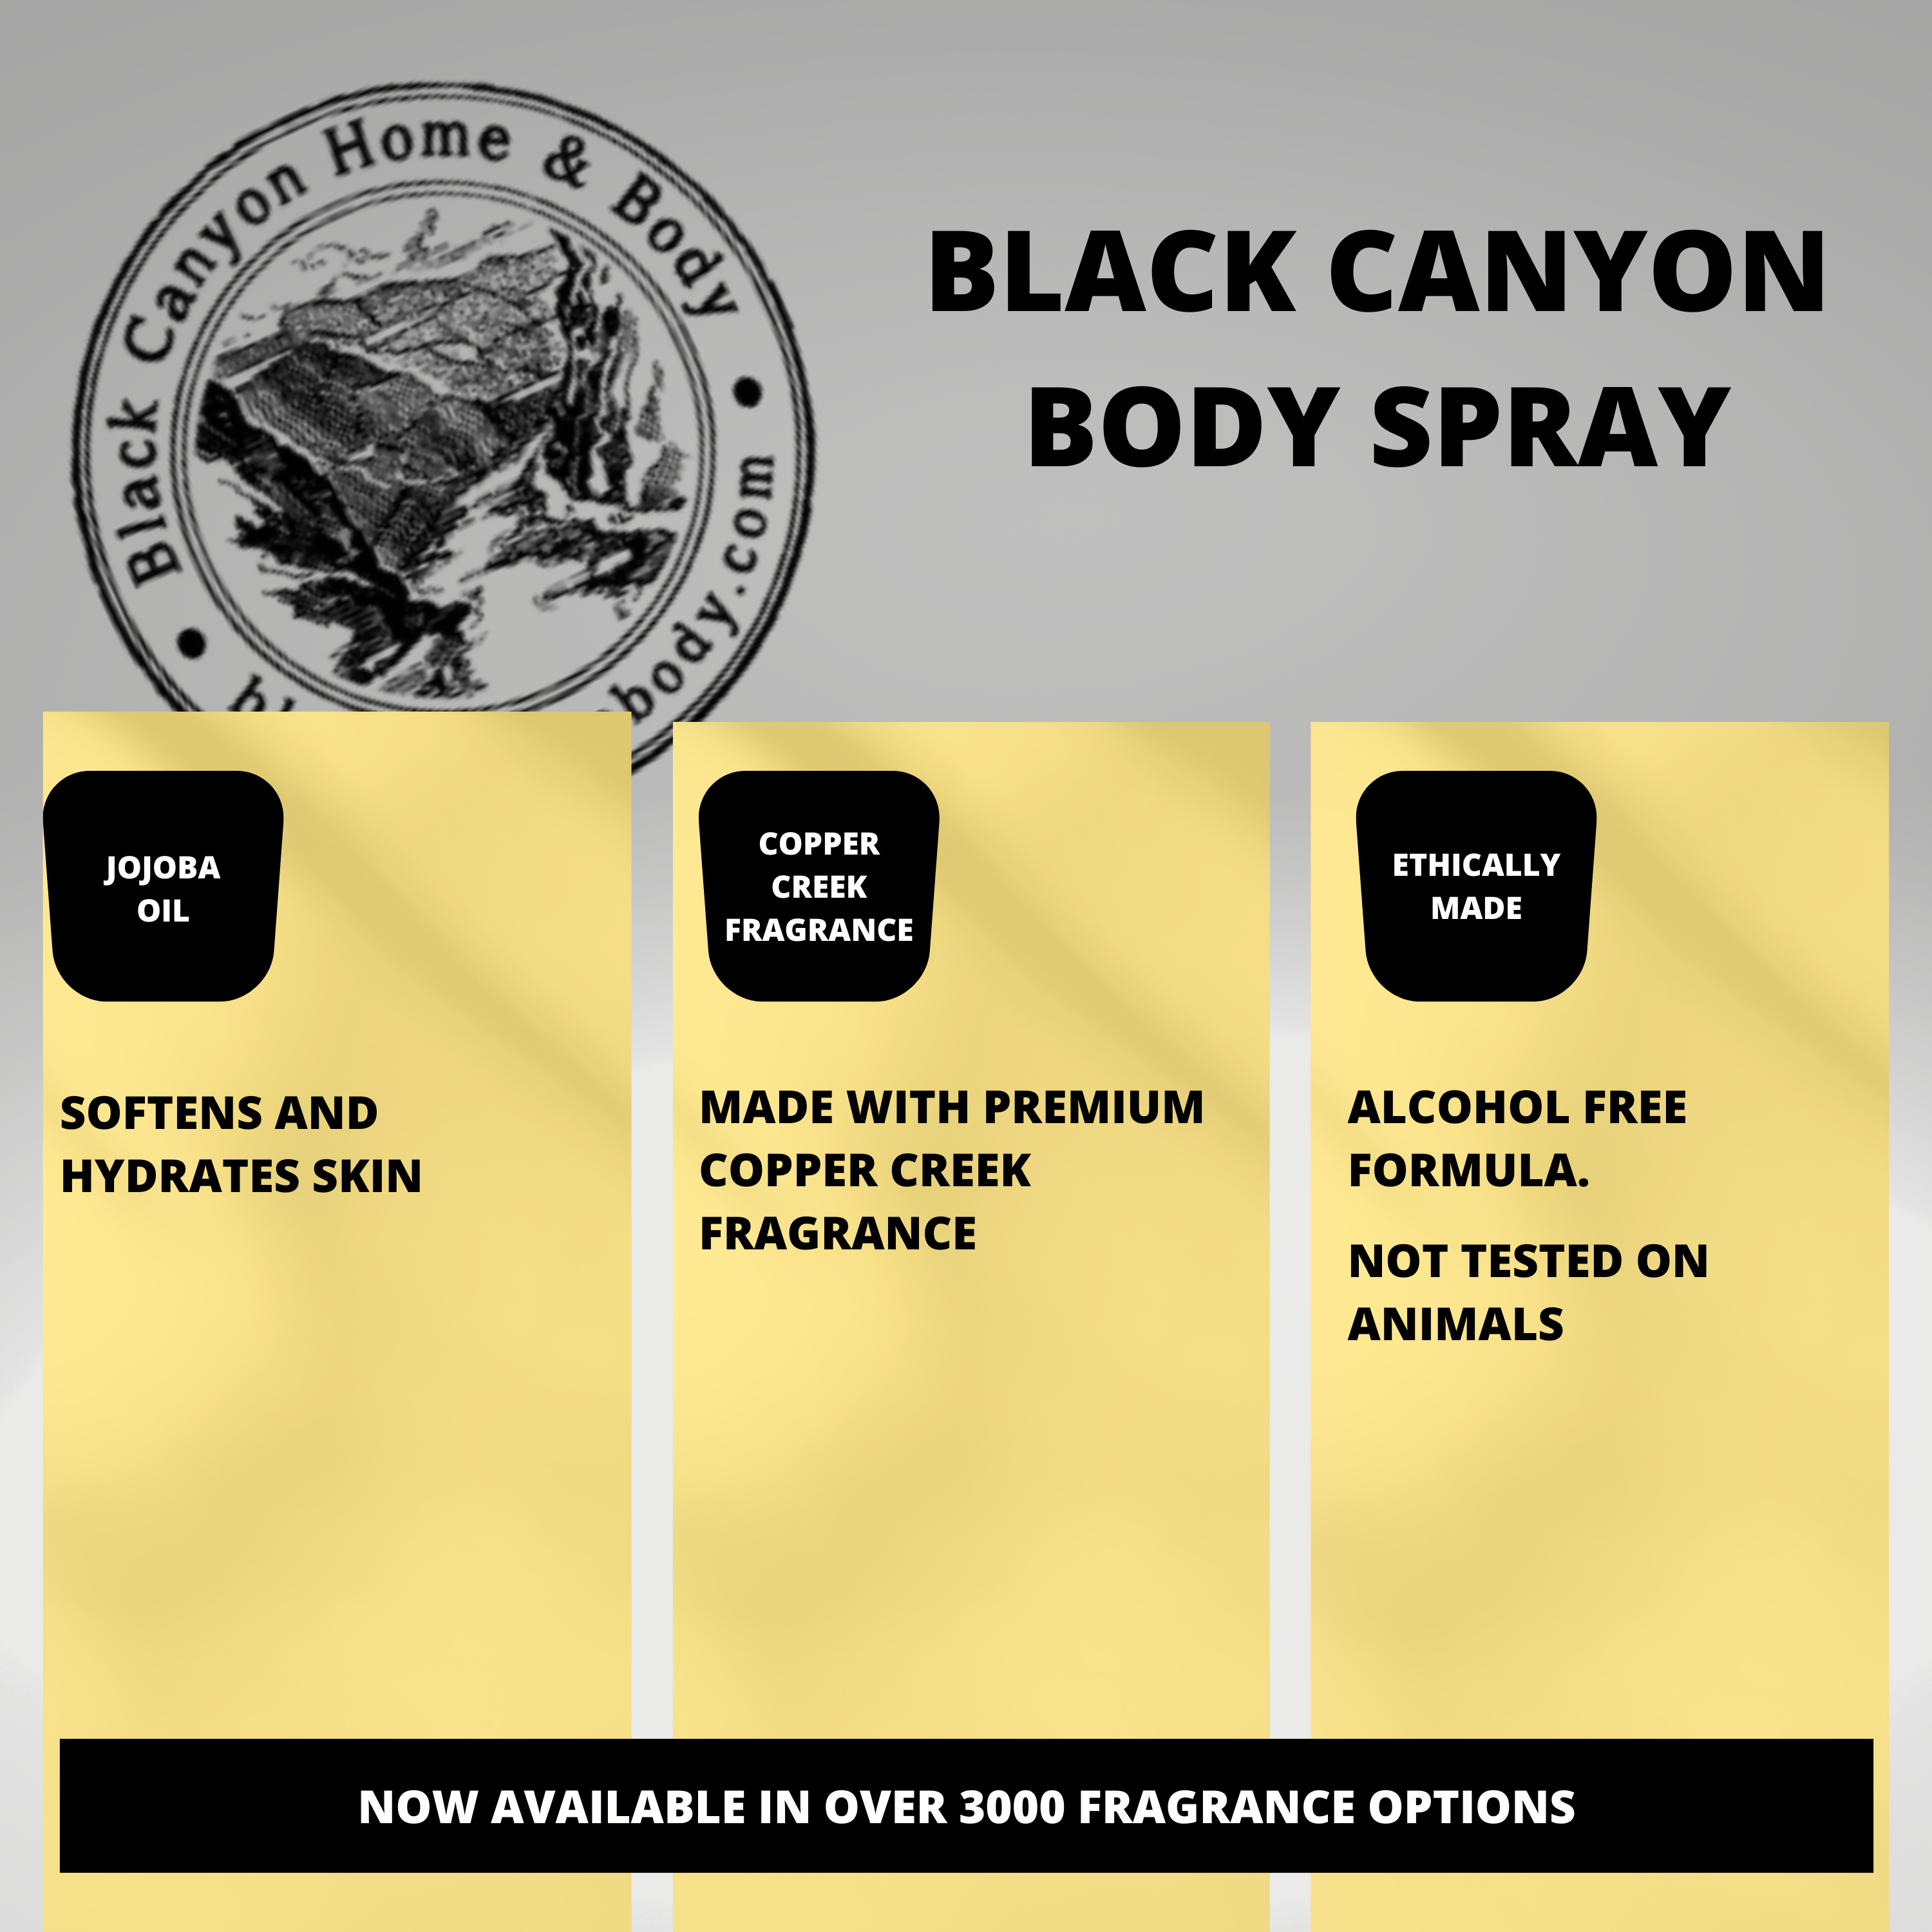 Black Canyon Black Licorice Scented Body Spray